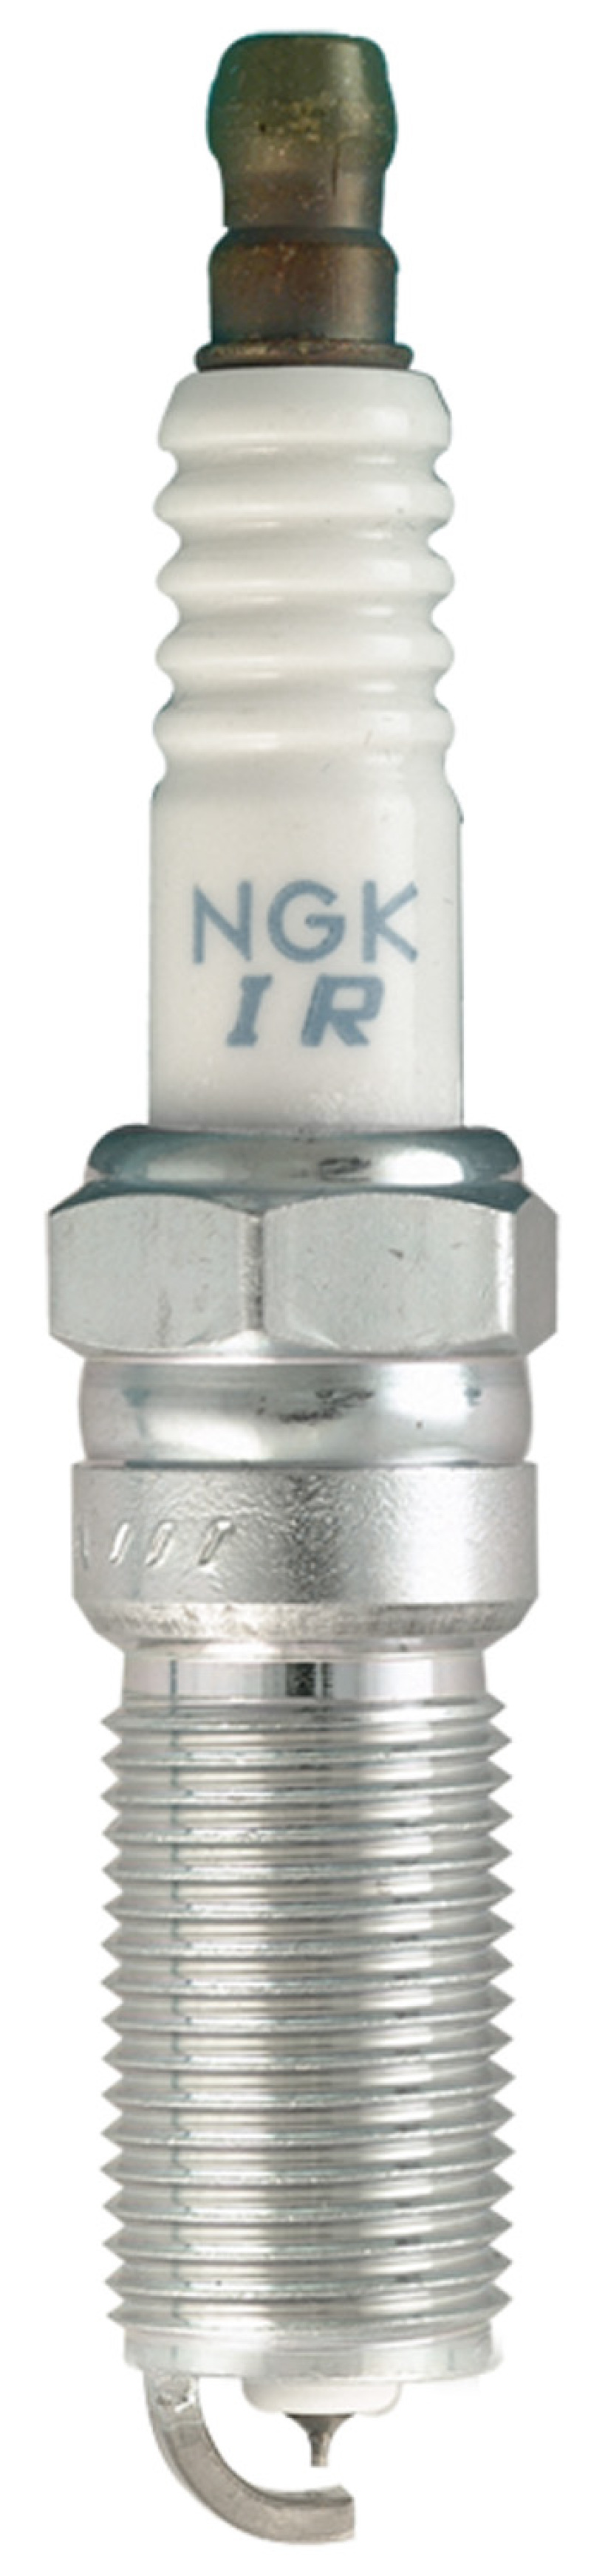 NGK Laser Iridium OE replacement Spark Plug Box of 4 (ILTR6A-8G) - 3787